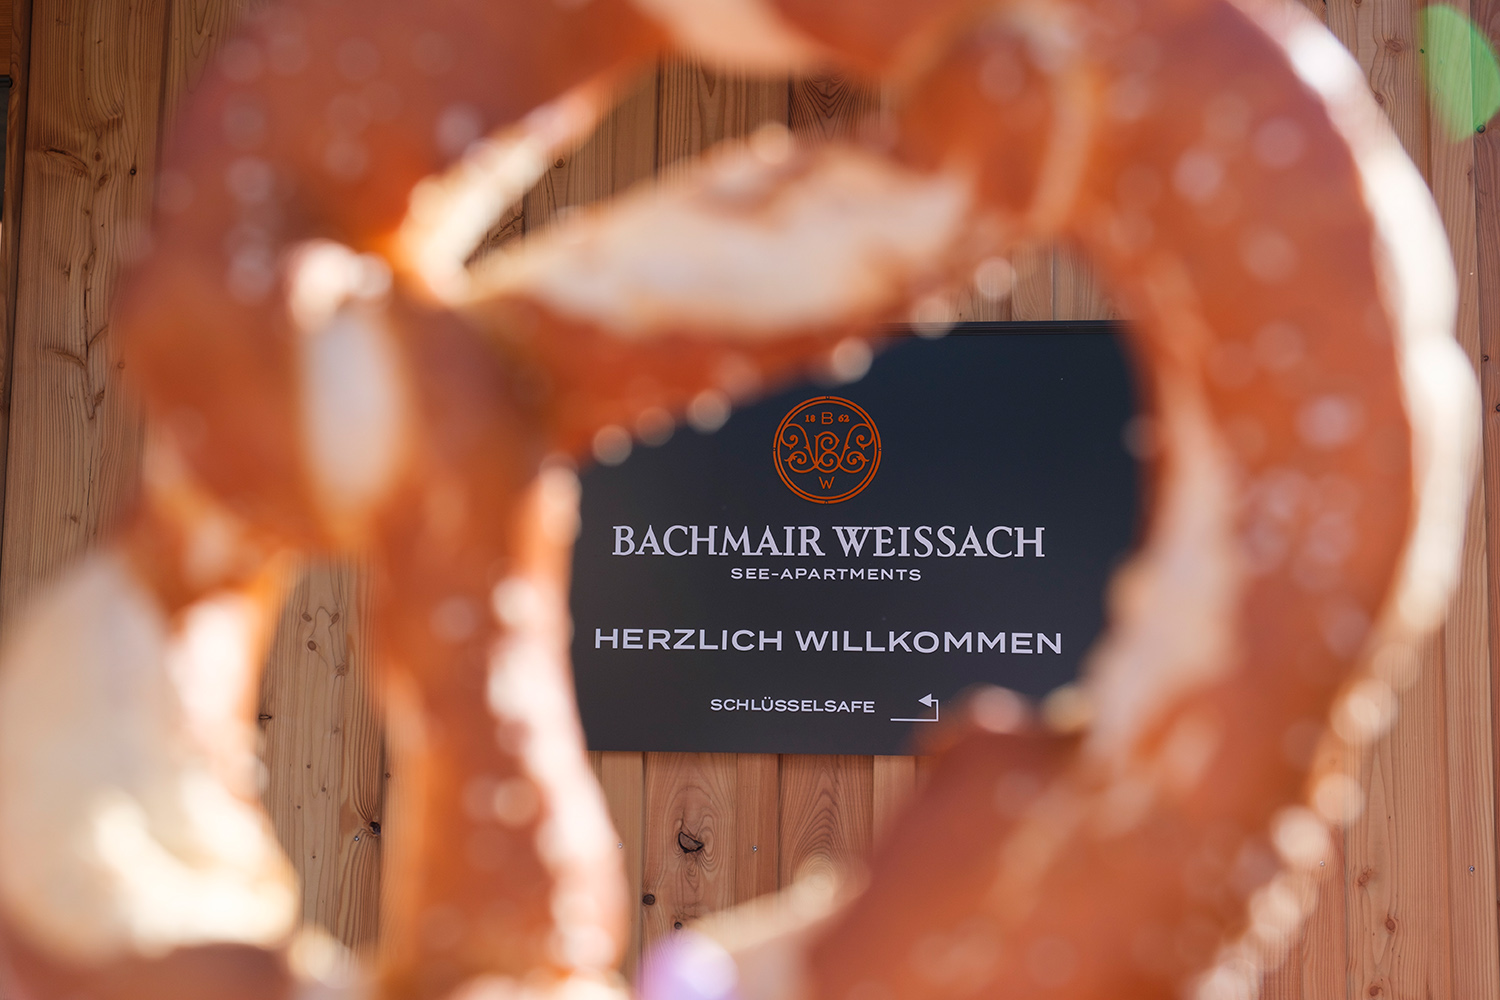 Bachmair Weissach